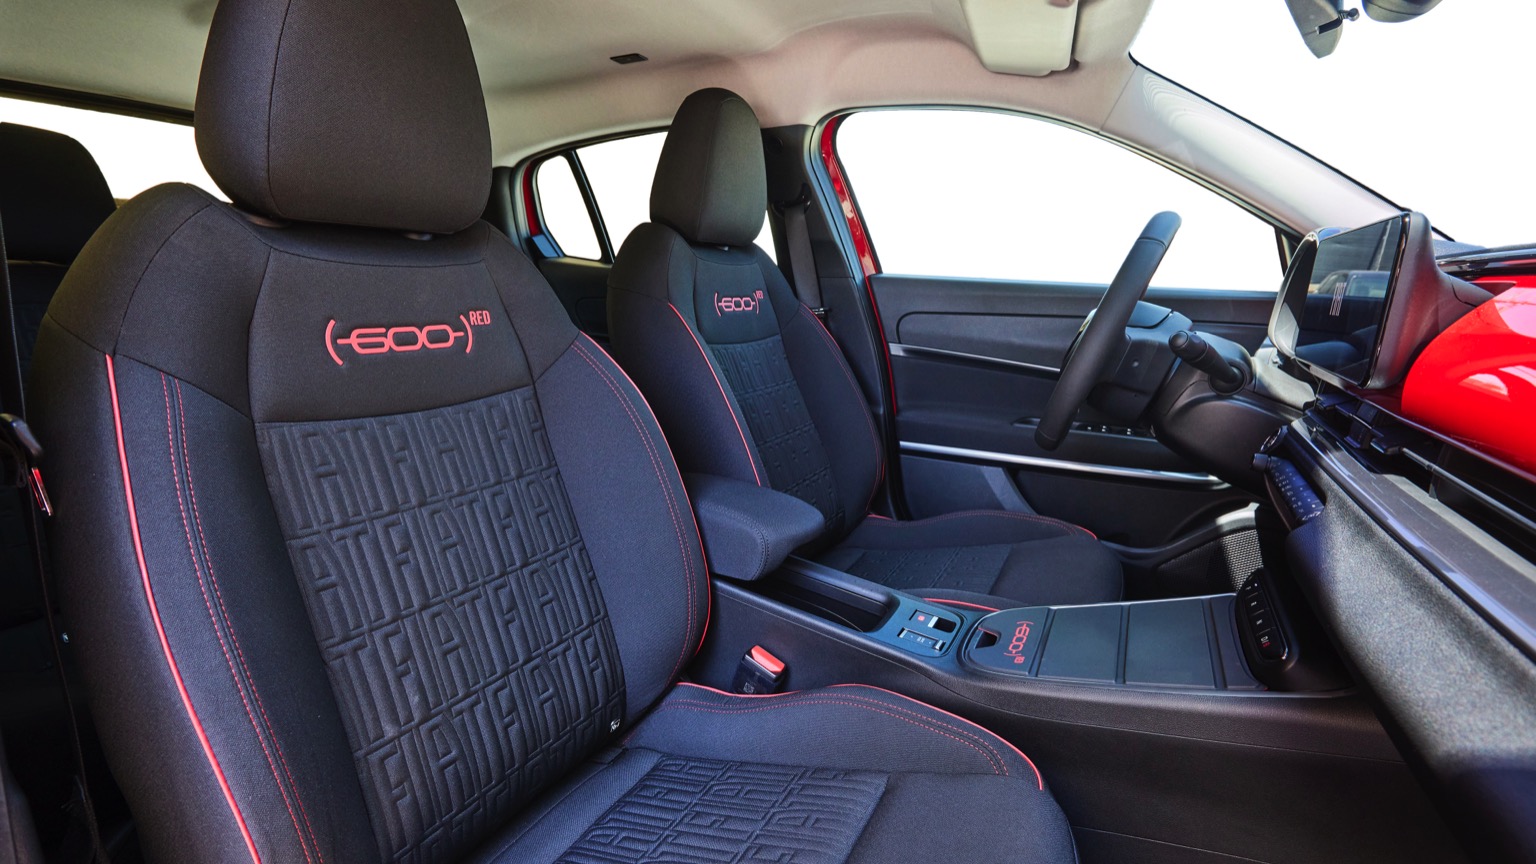 Fiat 600e Seating Capacity